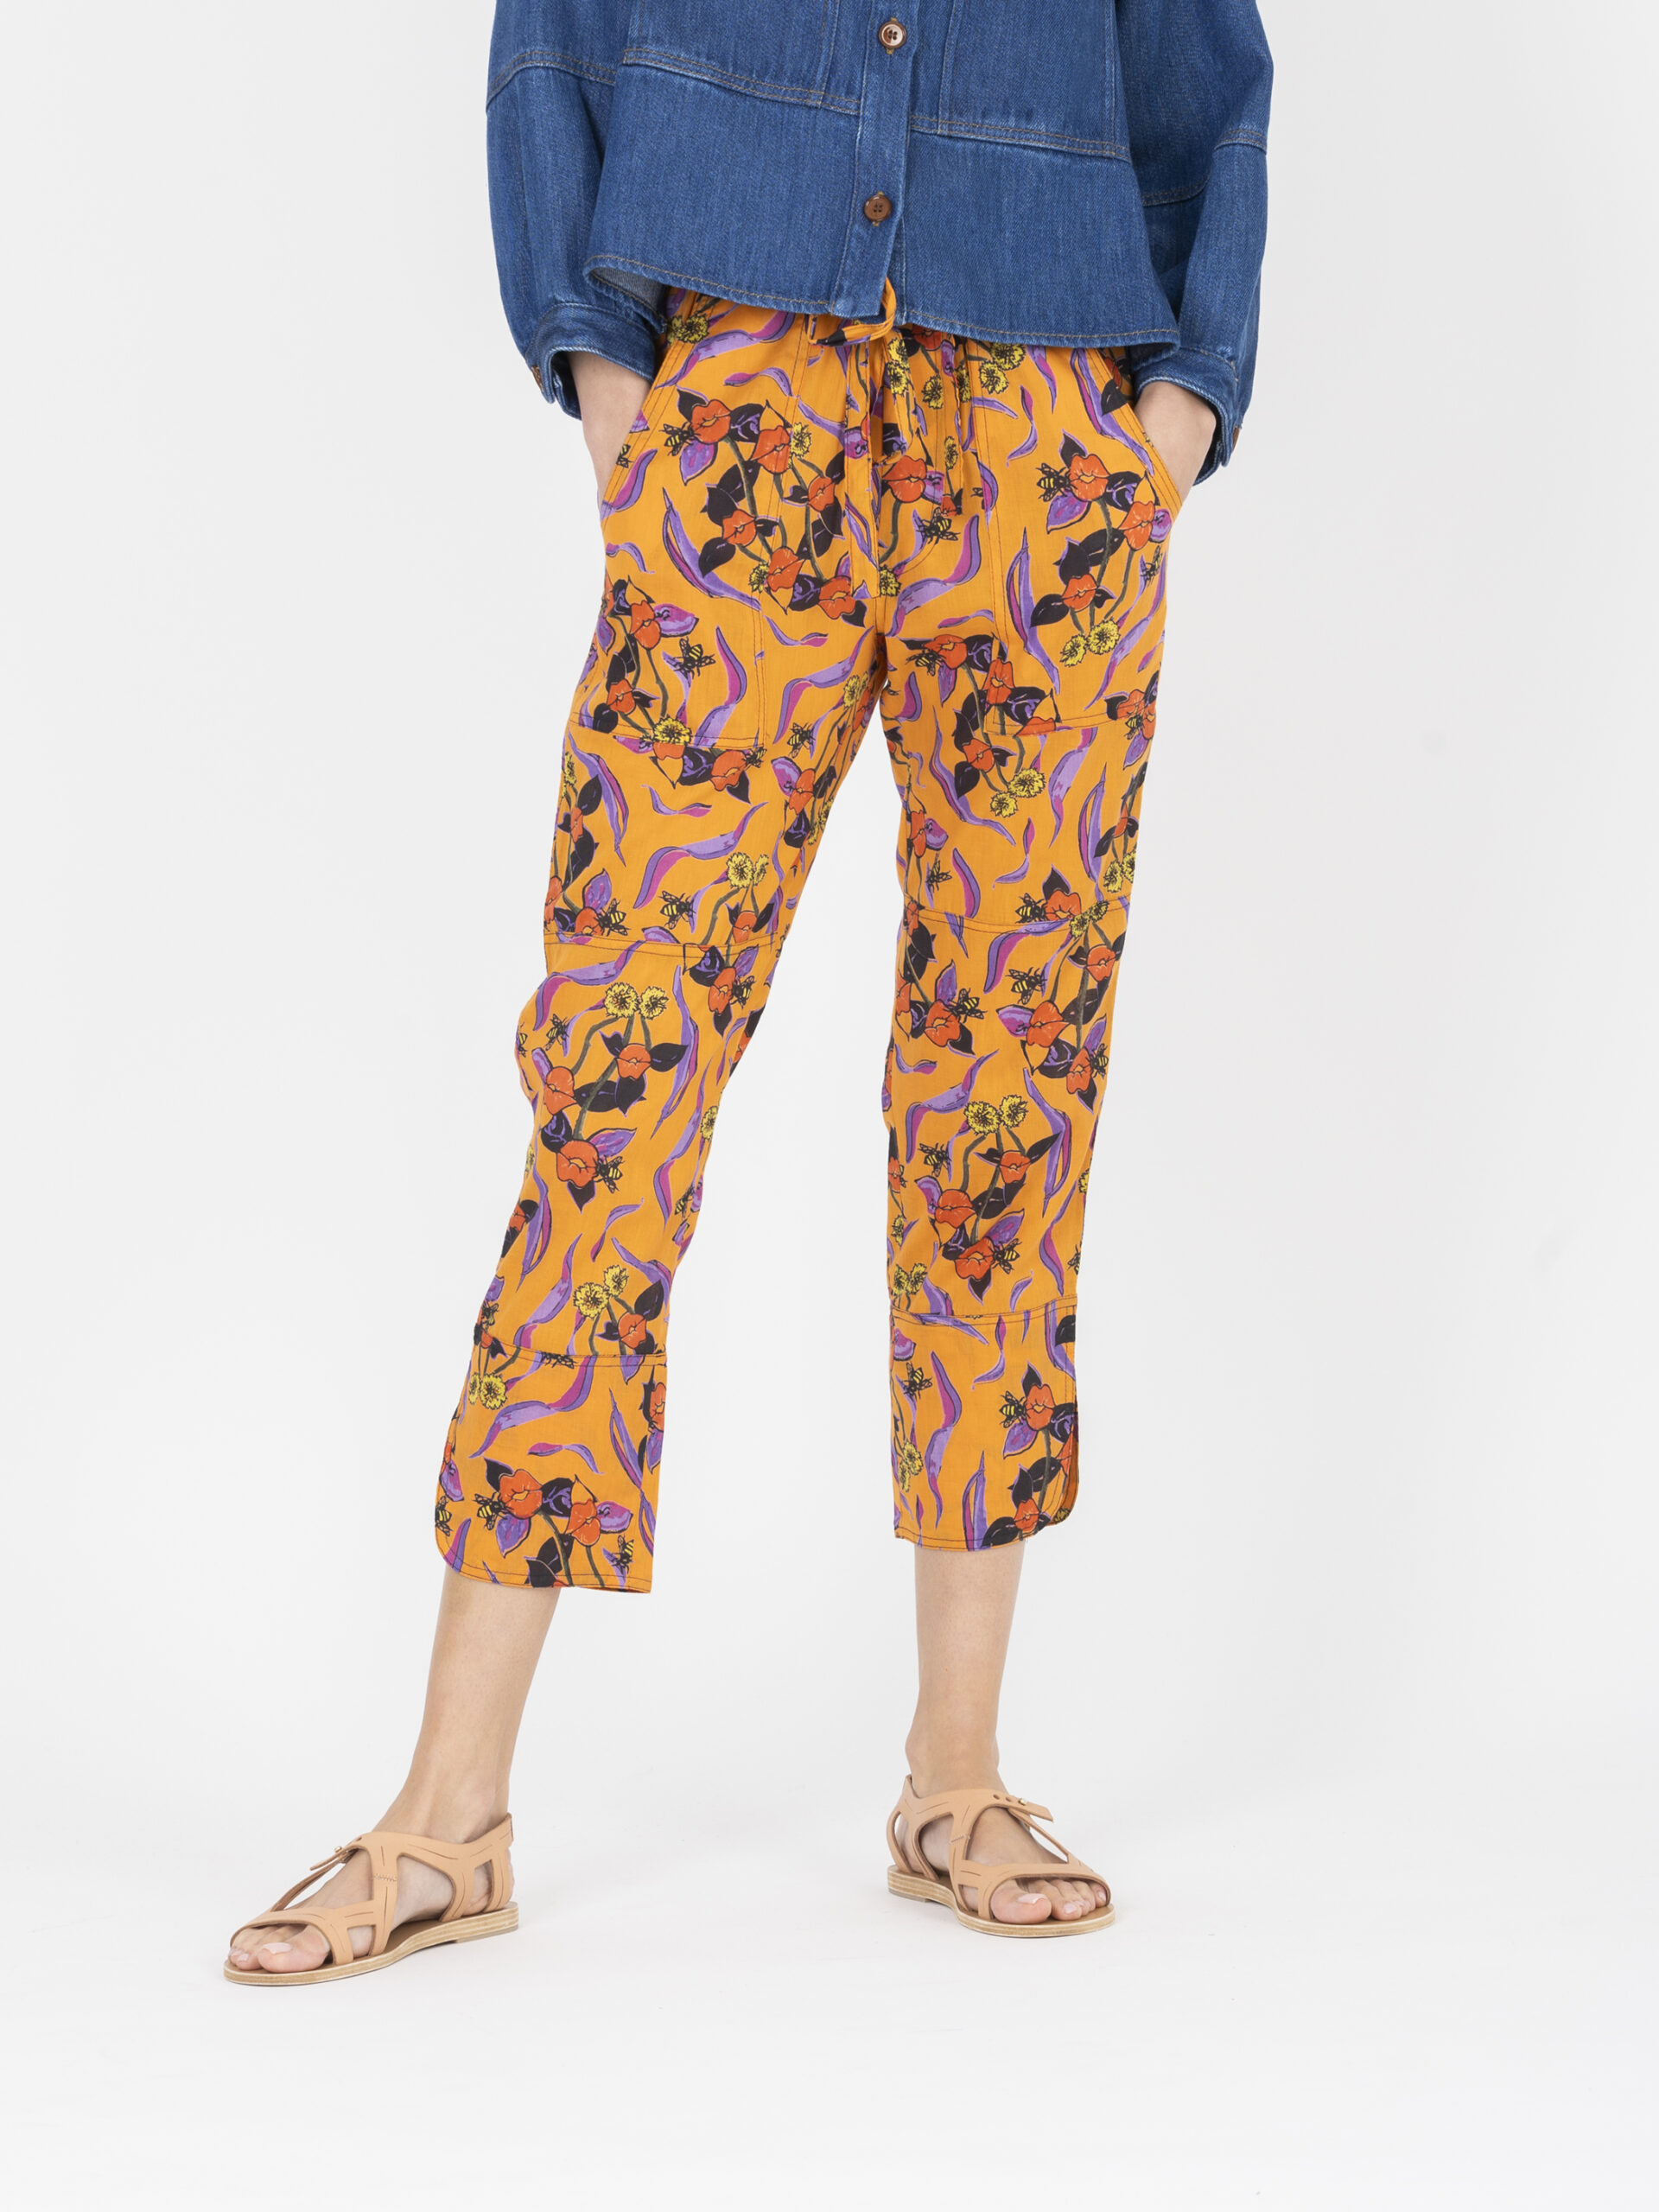 leda-orange-smack-printed-cargo-pants-cotton-greek-designers-kimale-limited-collection-matchboxathens